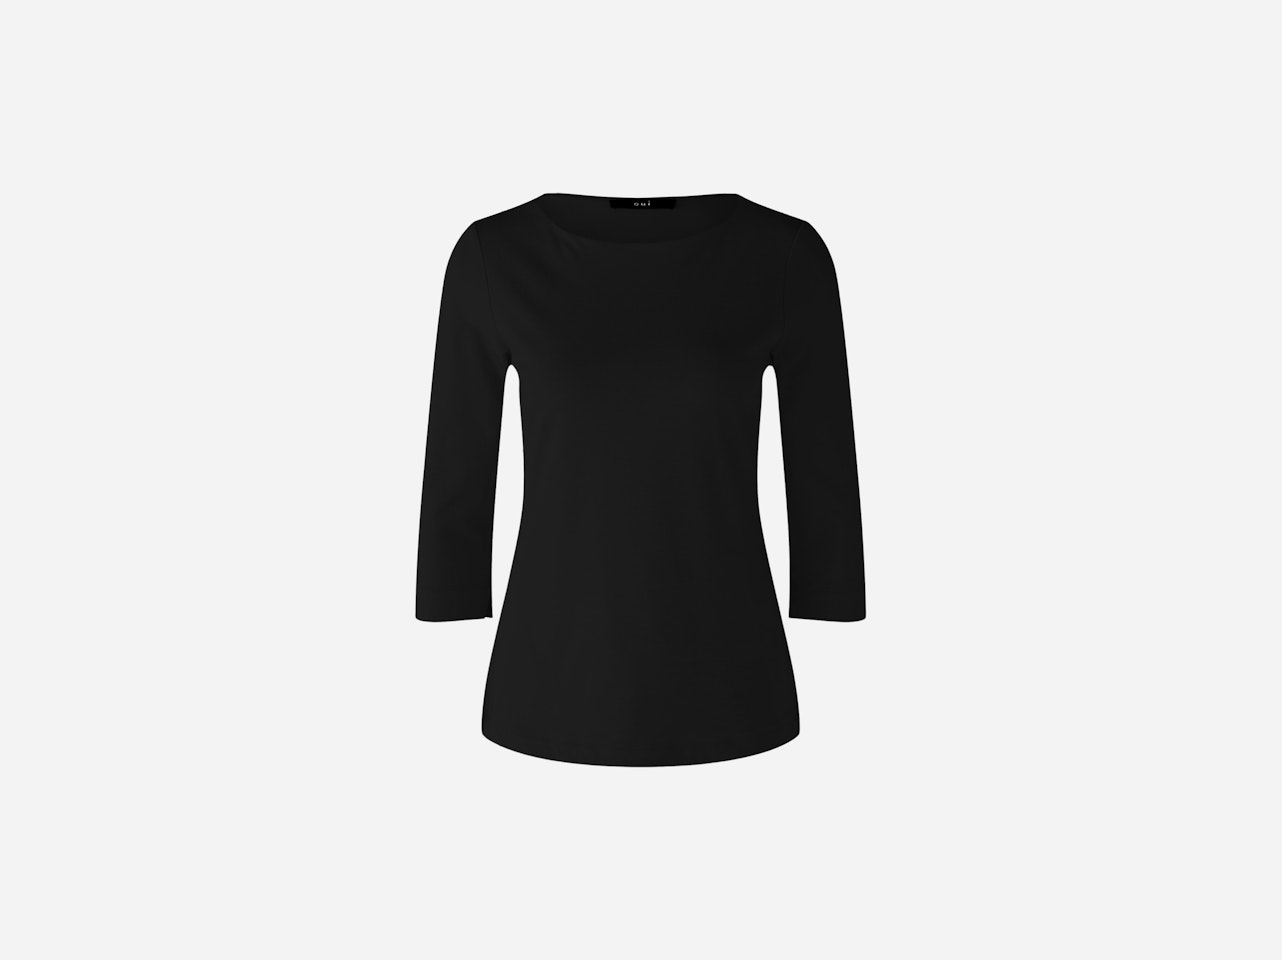 Bild 1 von T-shirt elastic cotton-/modal quality in black | Oui